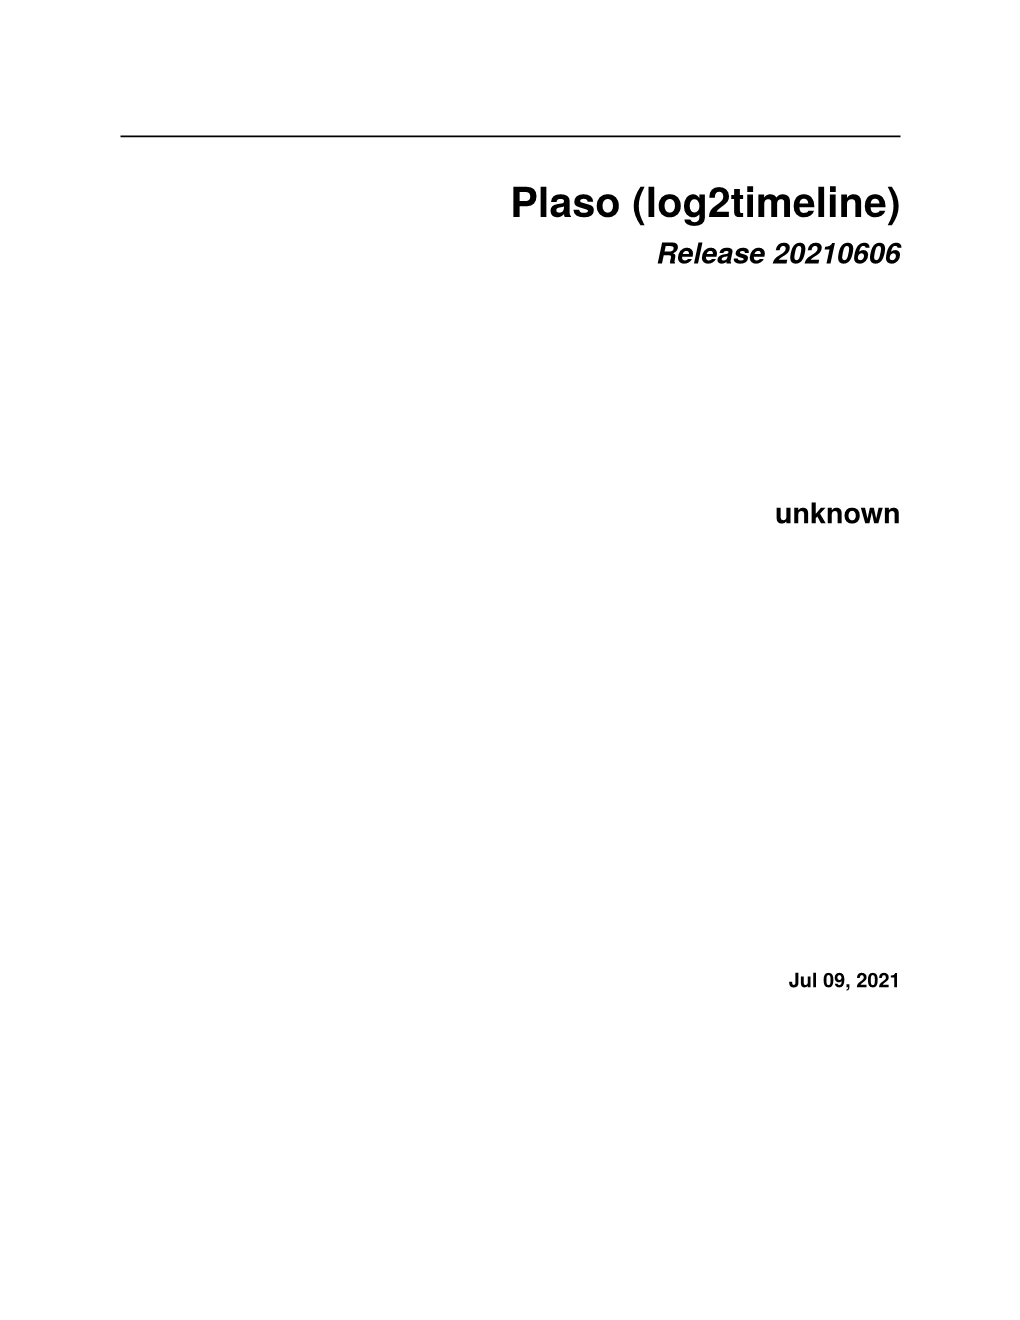 Plaso (Log2timeline) Release 20210606